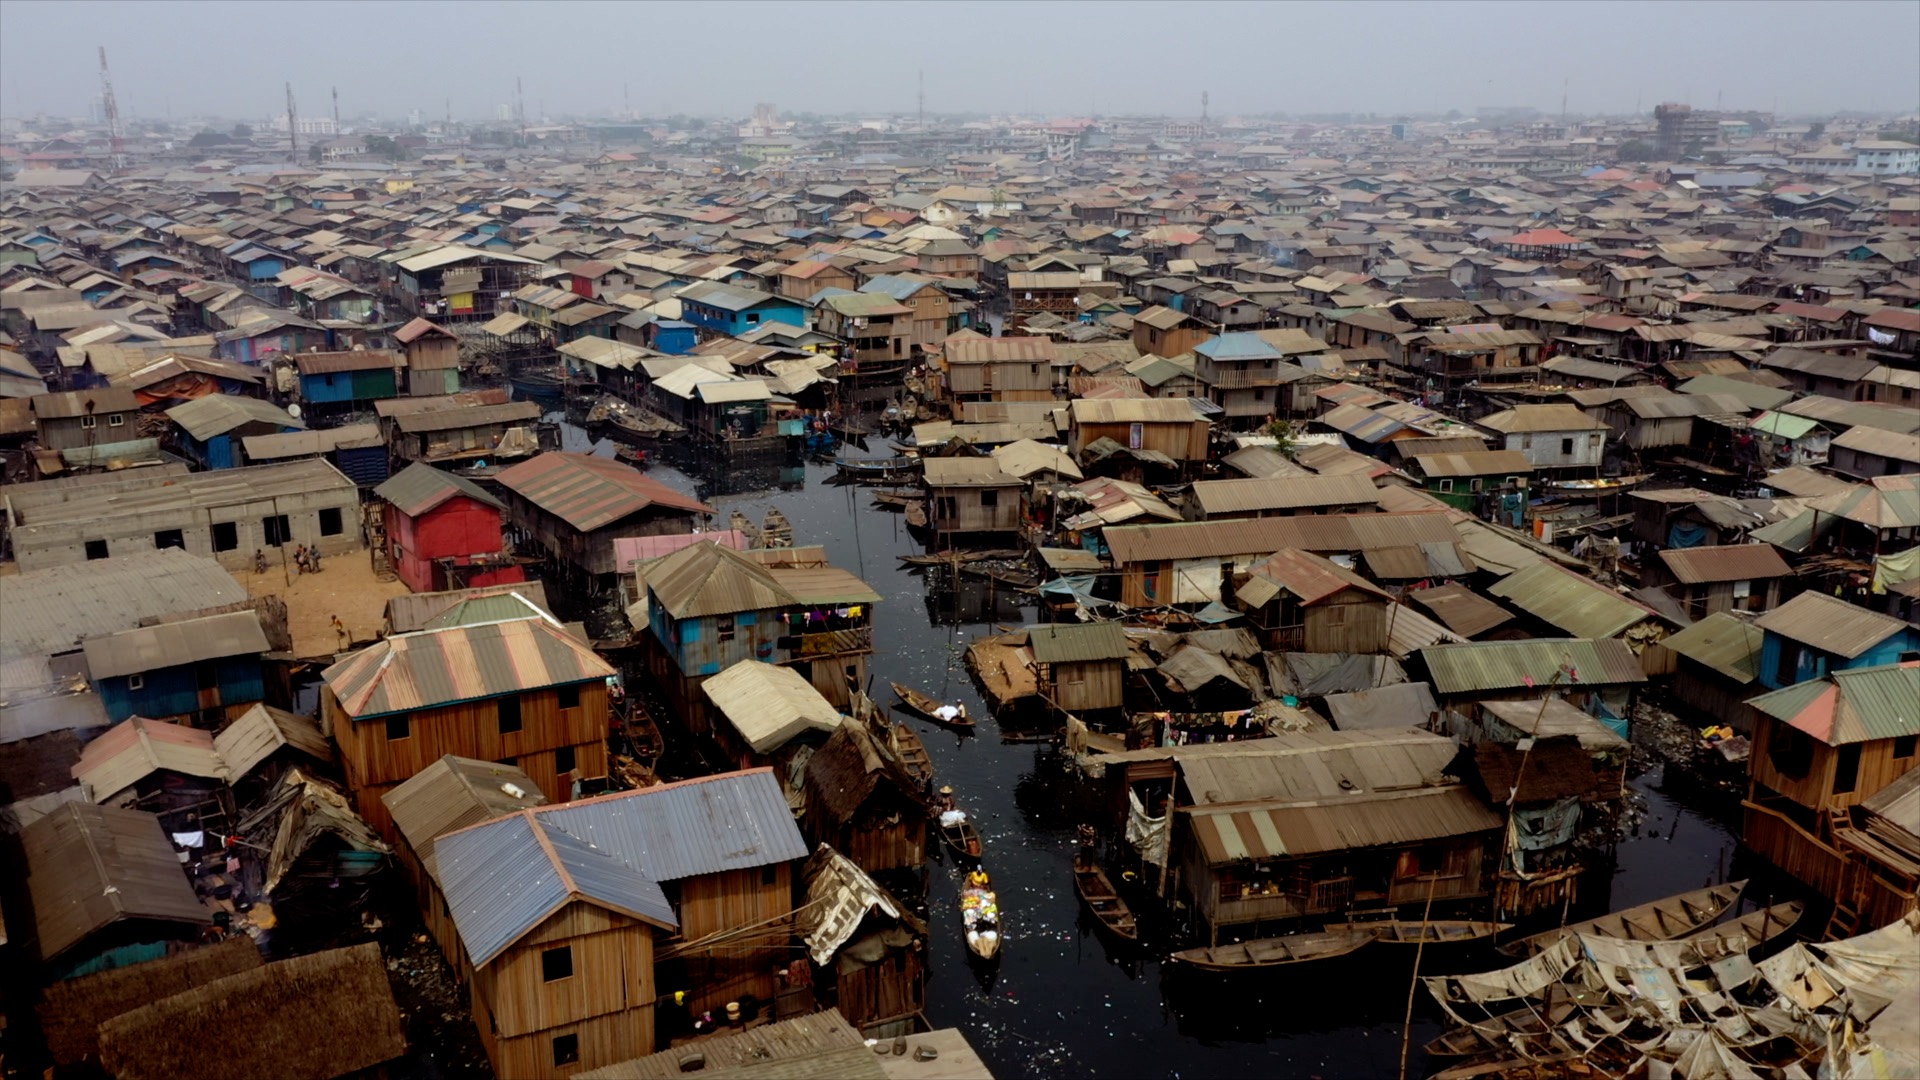 Aerial view of Makoko slum